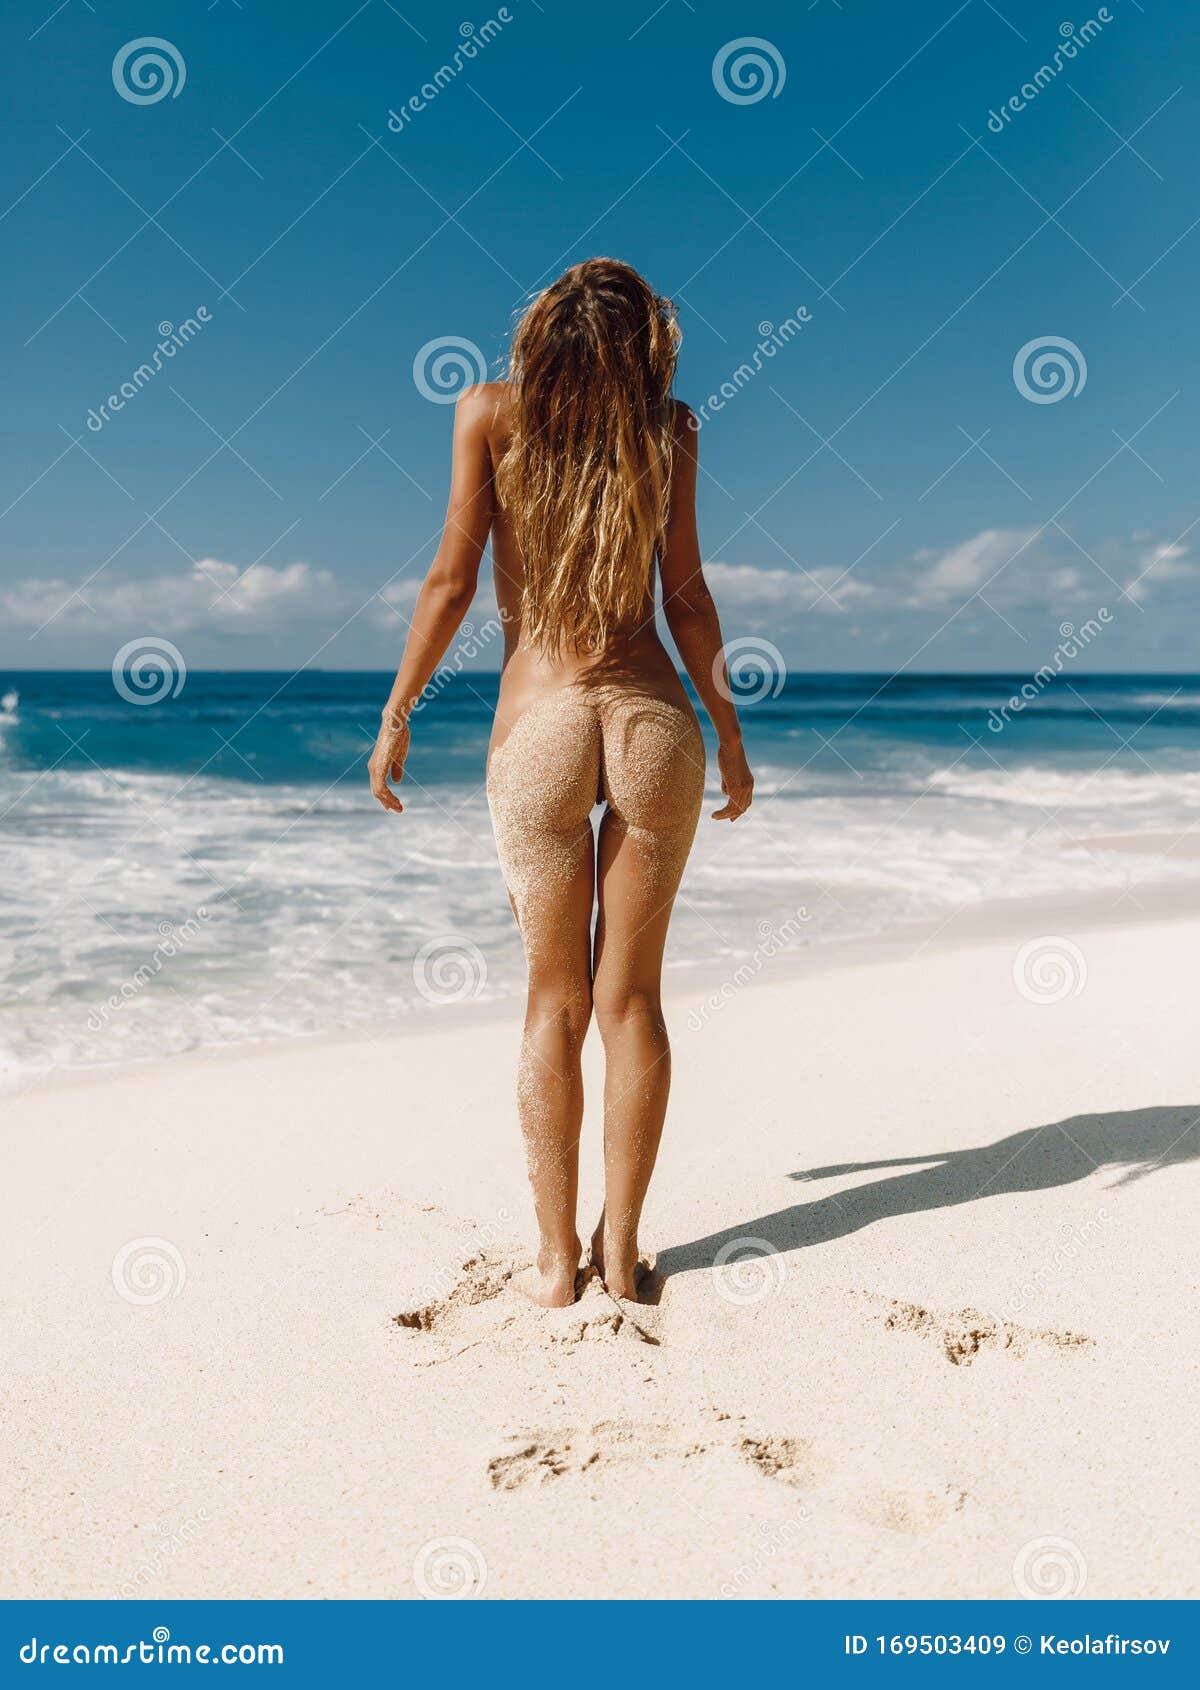 candace lattimore share naked women walking on beach photos